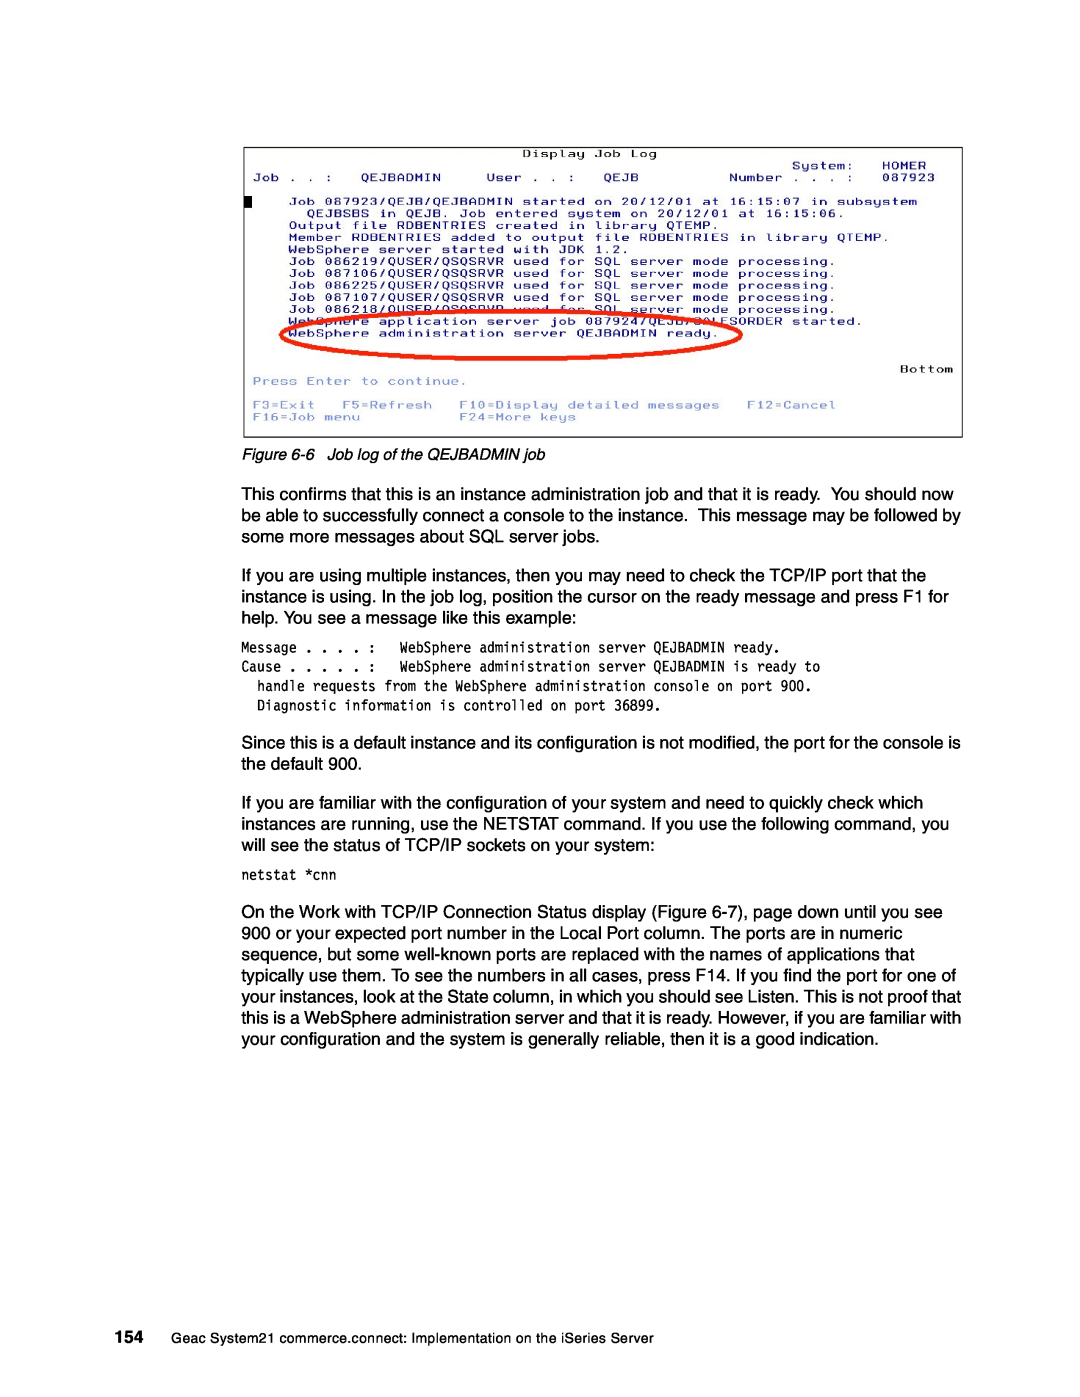 IBM SG24-6526-00 manual 6 Job log of the QEJBADMIN job, Message . . . . WebSphere administration server QEJBADMIN ready 